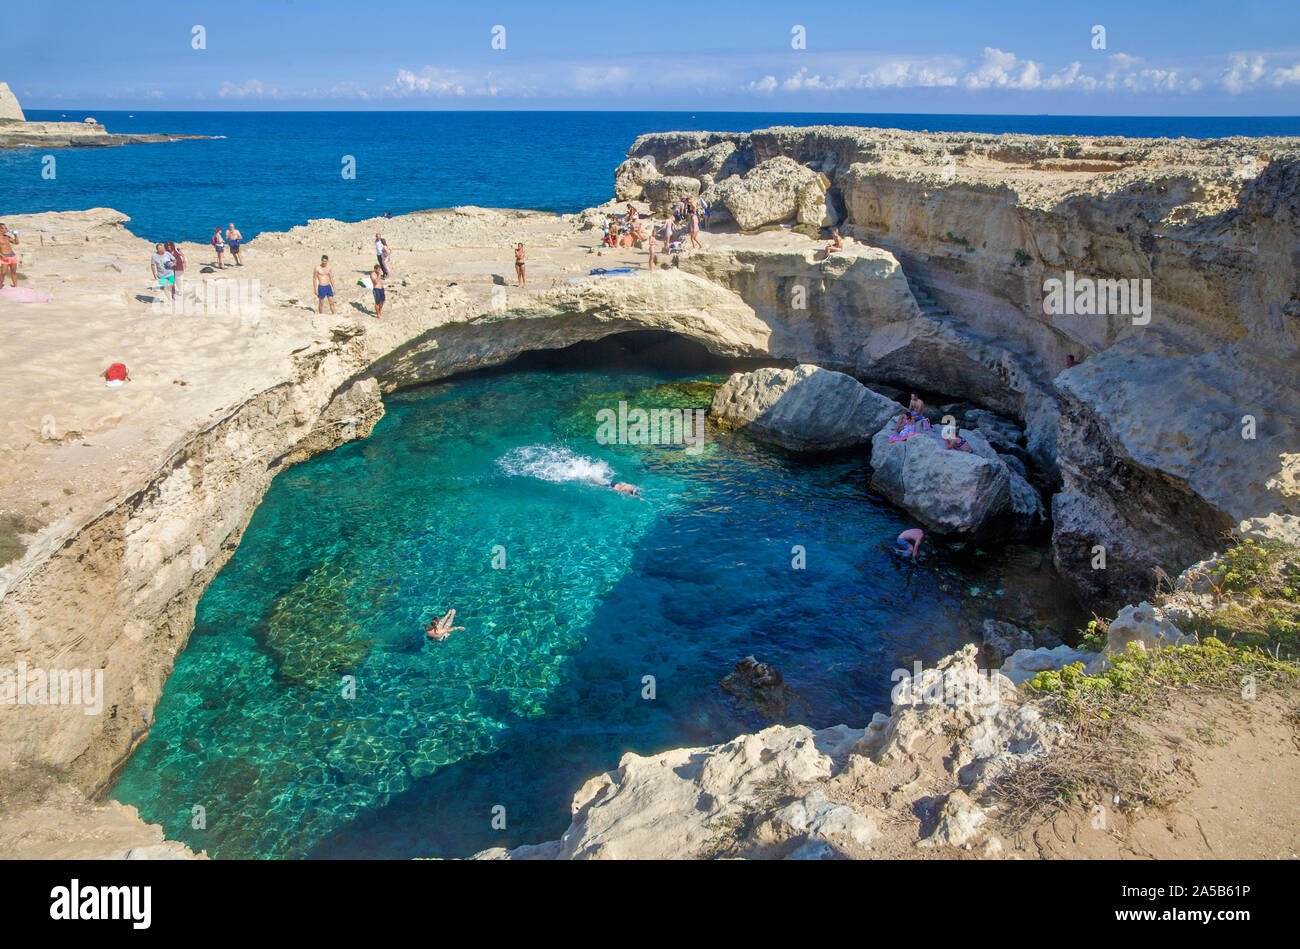 Cave of Poetry, a famous natural pool, Roca Vecchia, Melendugno, Lecce, Apulia, Italy Stock Photo